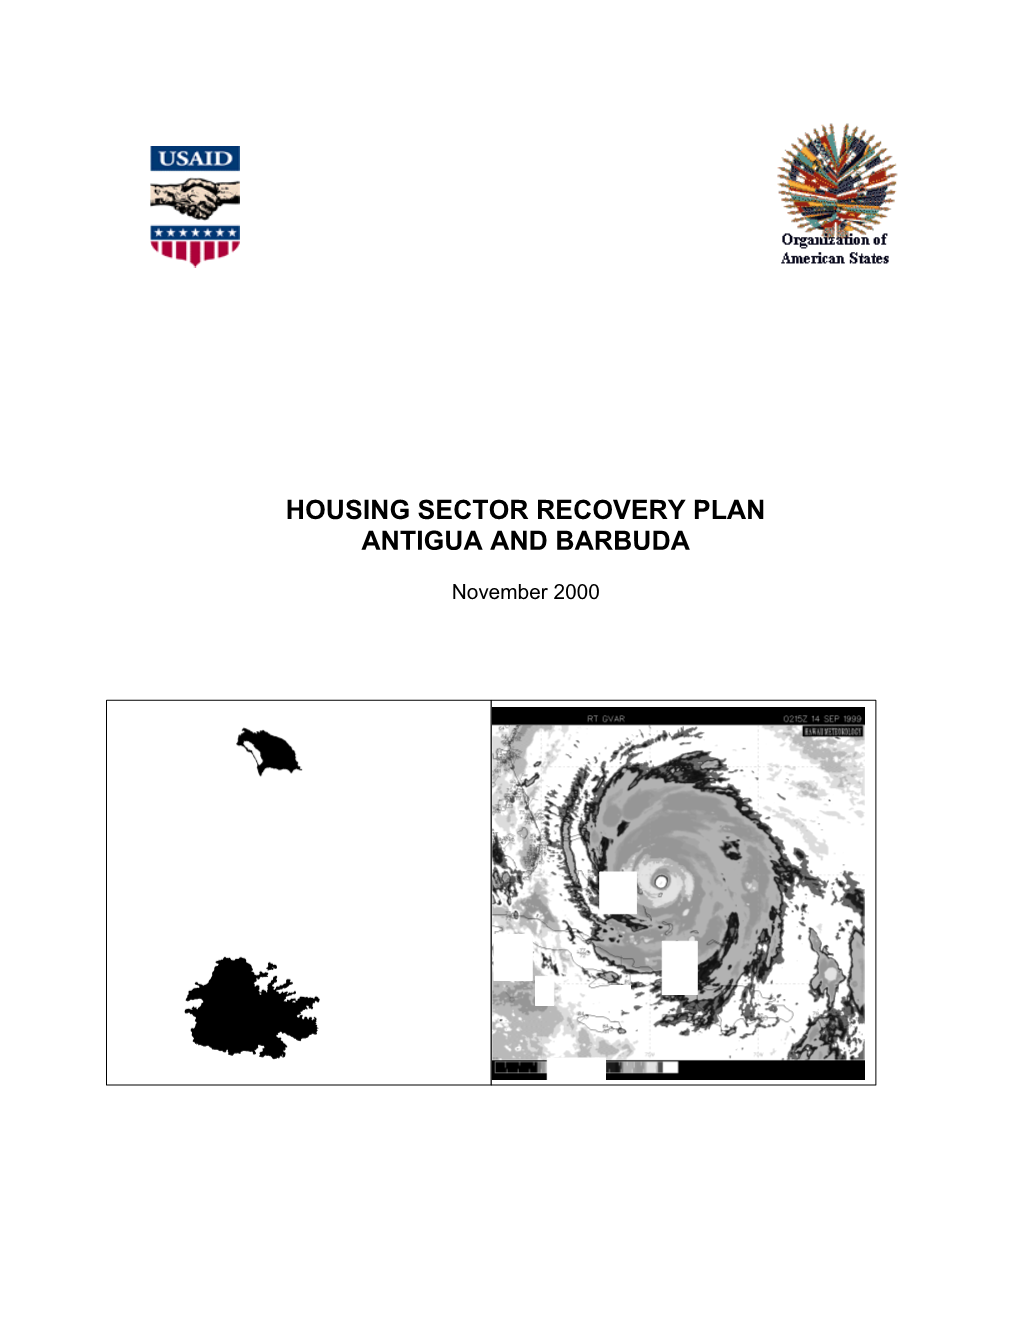 Housing Sector Recovery Plan - Antigua/Barbuda